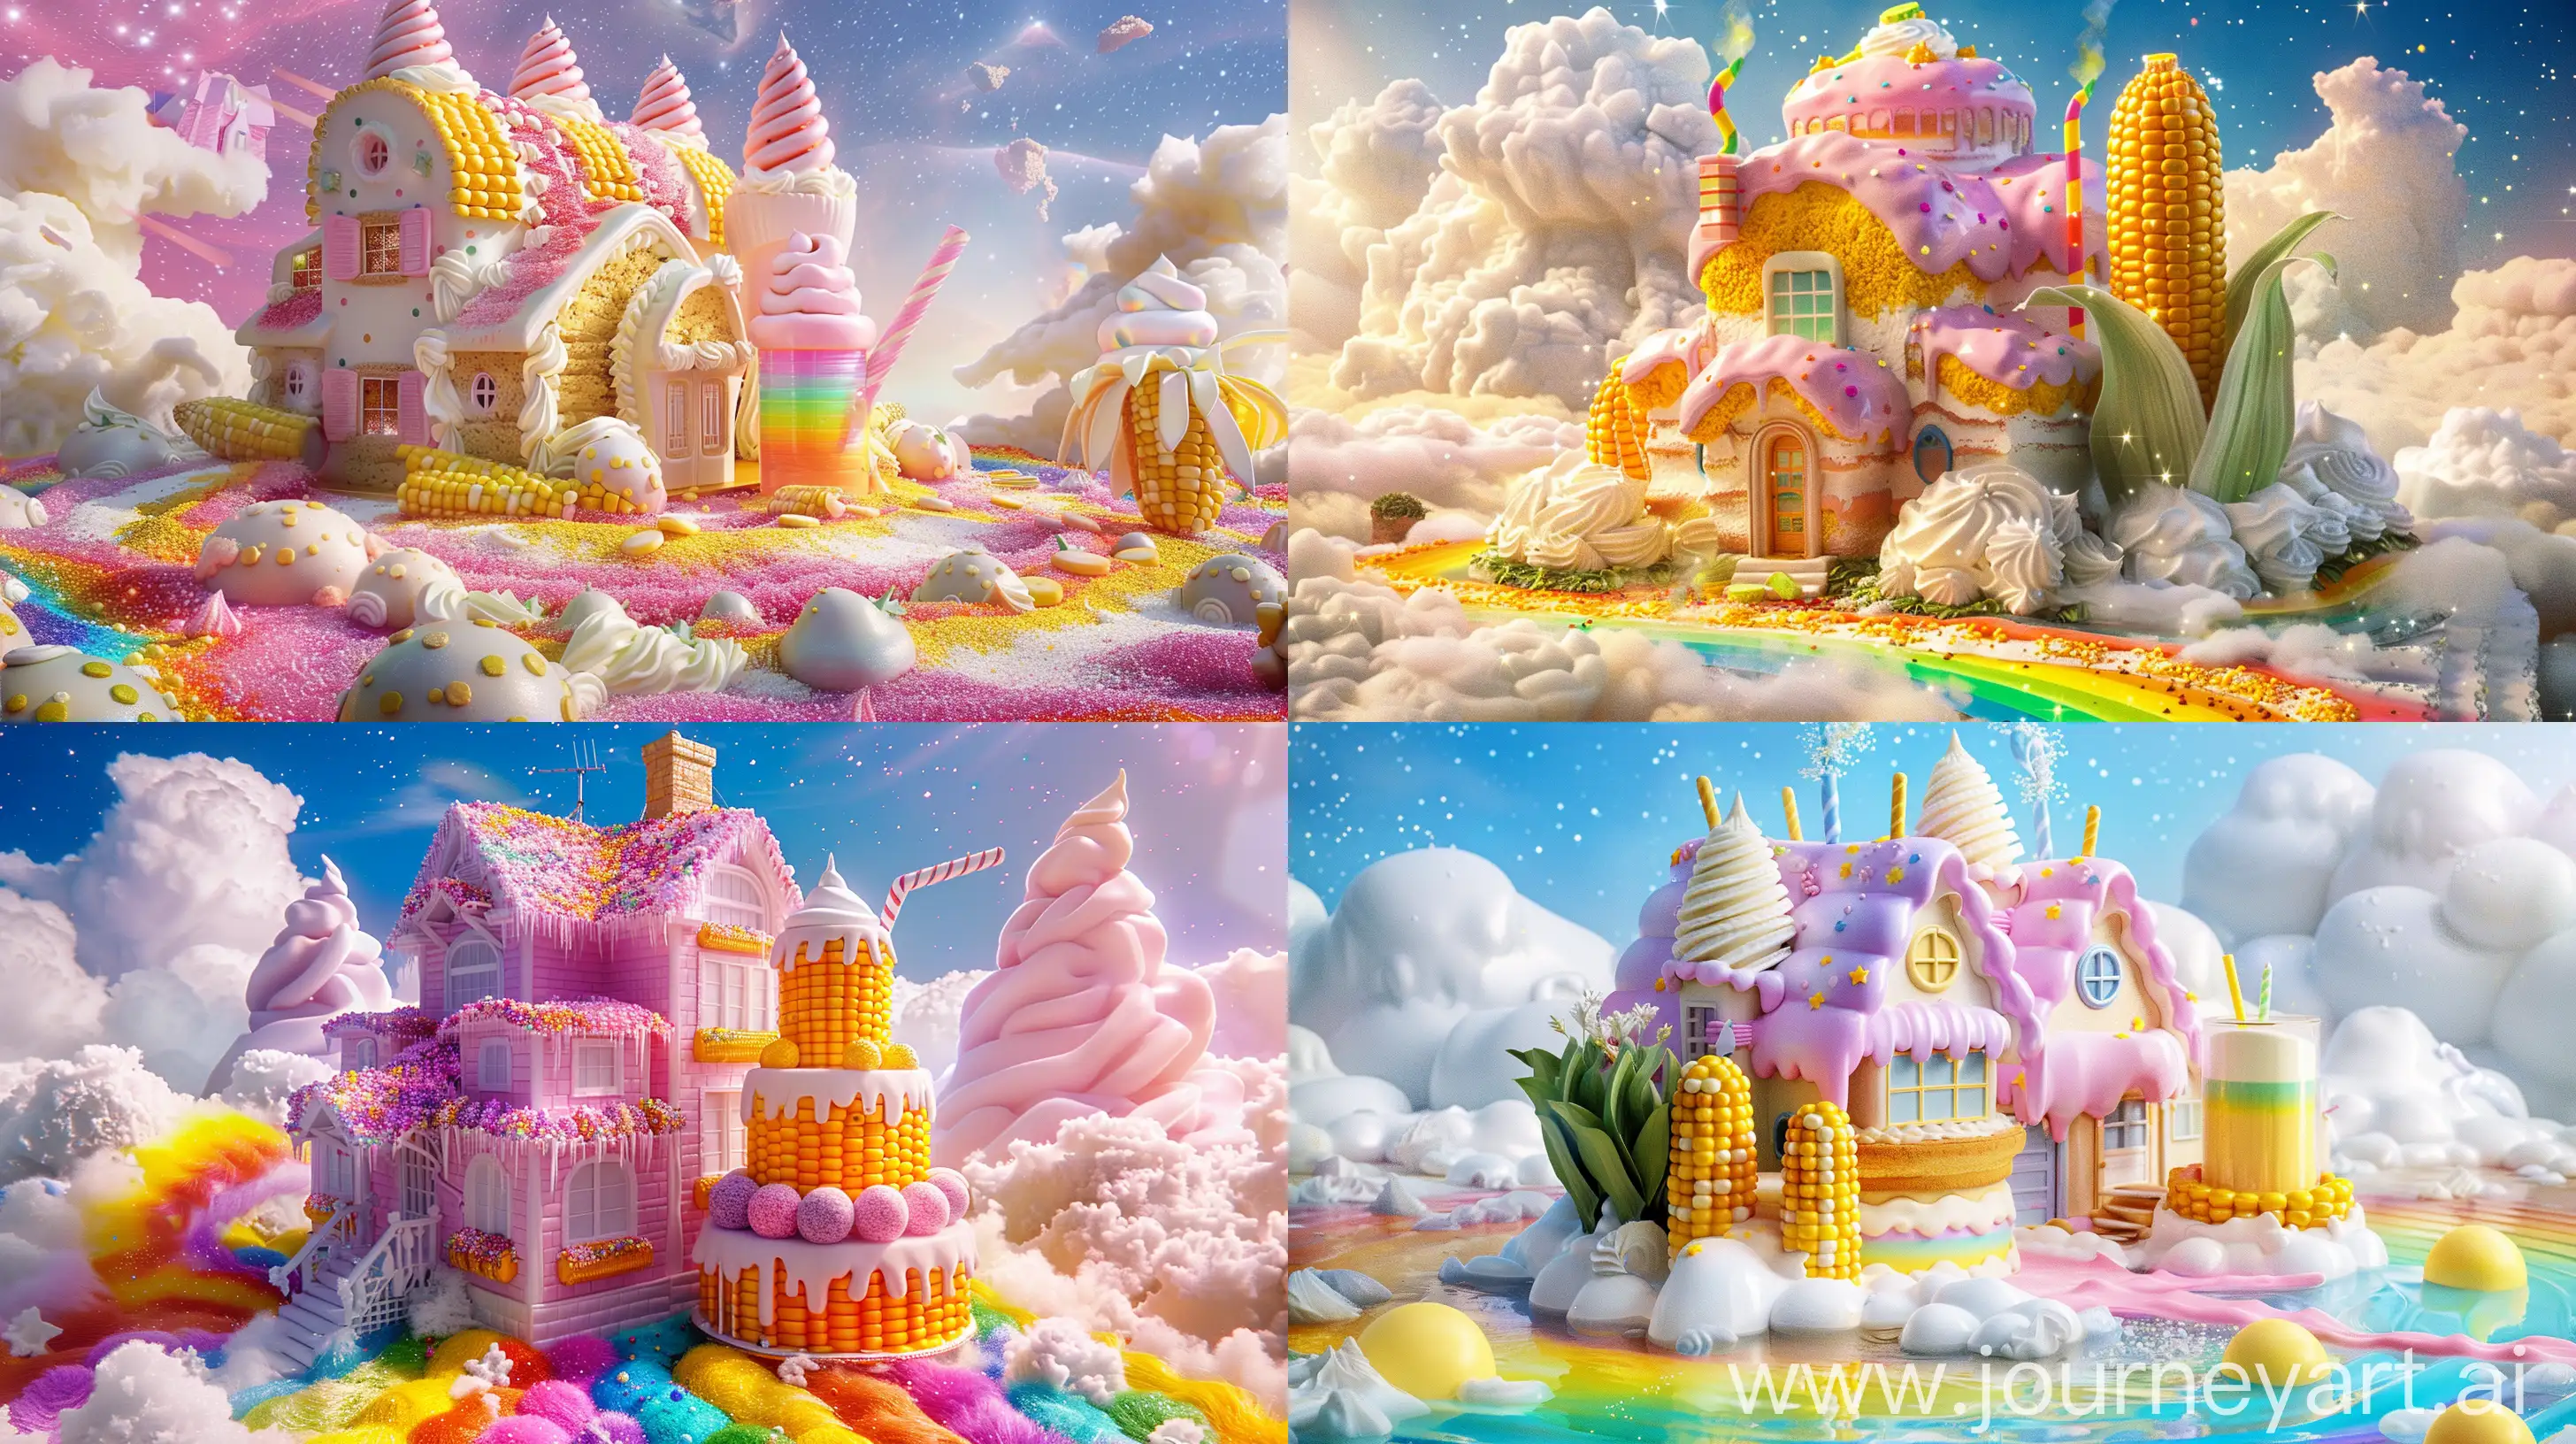 Fantasy-Galaxy-Paradise-Big-Cake-House-with-Rainbow-Milk